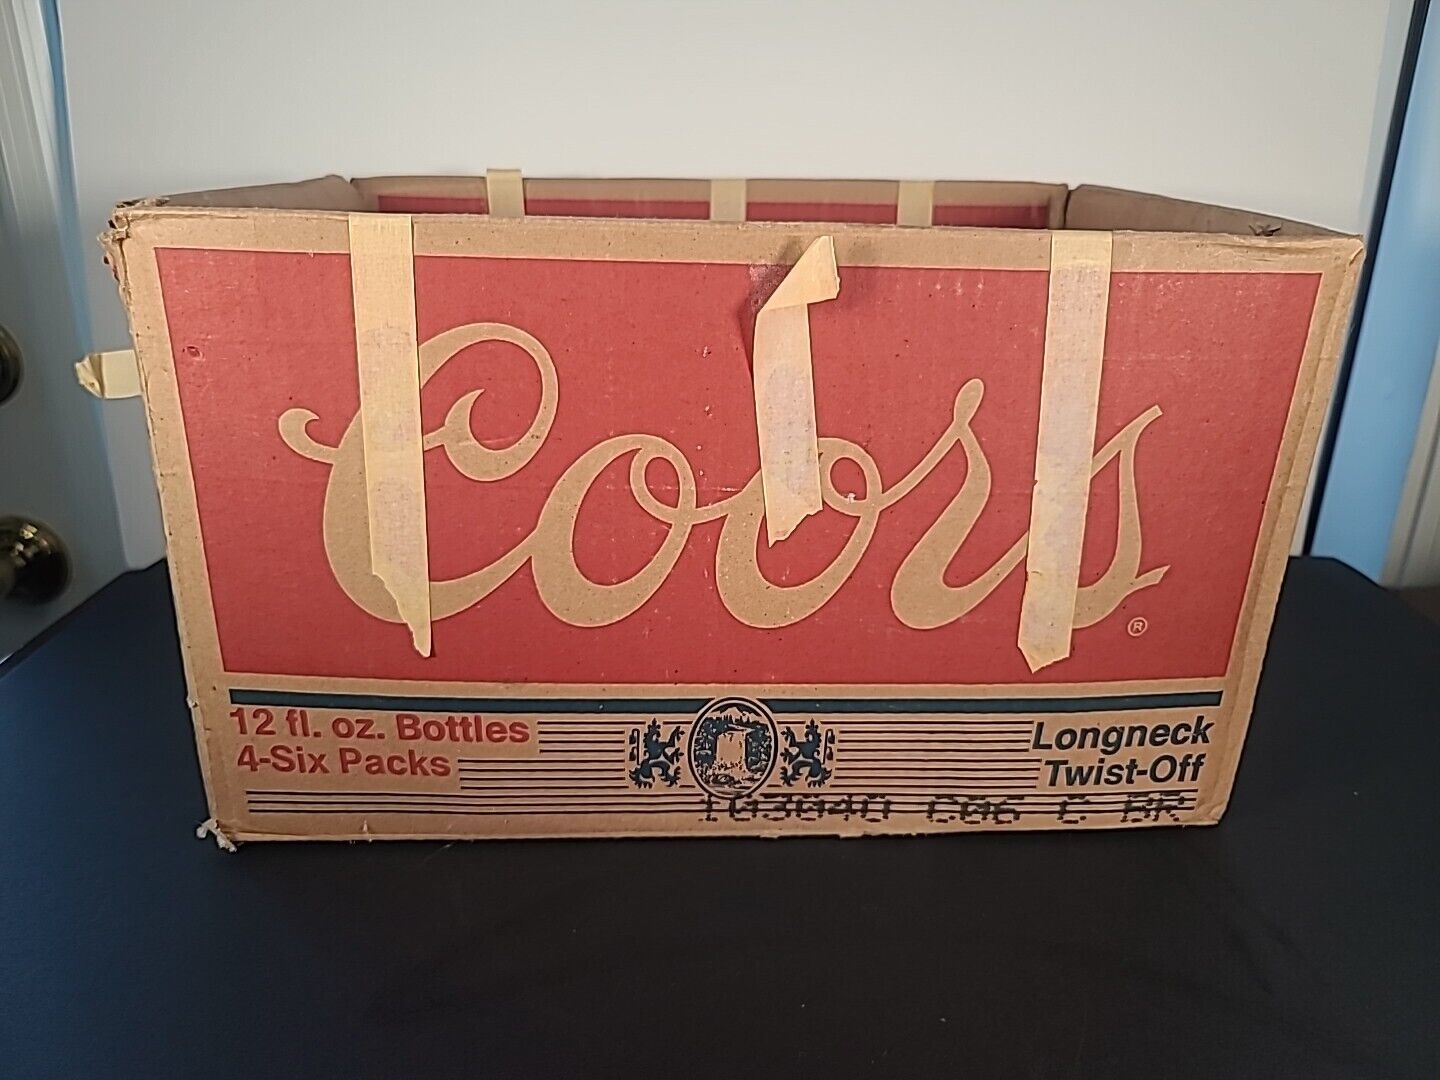 VINTAGE 1990\'s Coors Cardboard Box 4- Six Pack 12 oz Bottles Long Neck Twist-Off